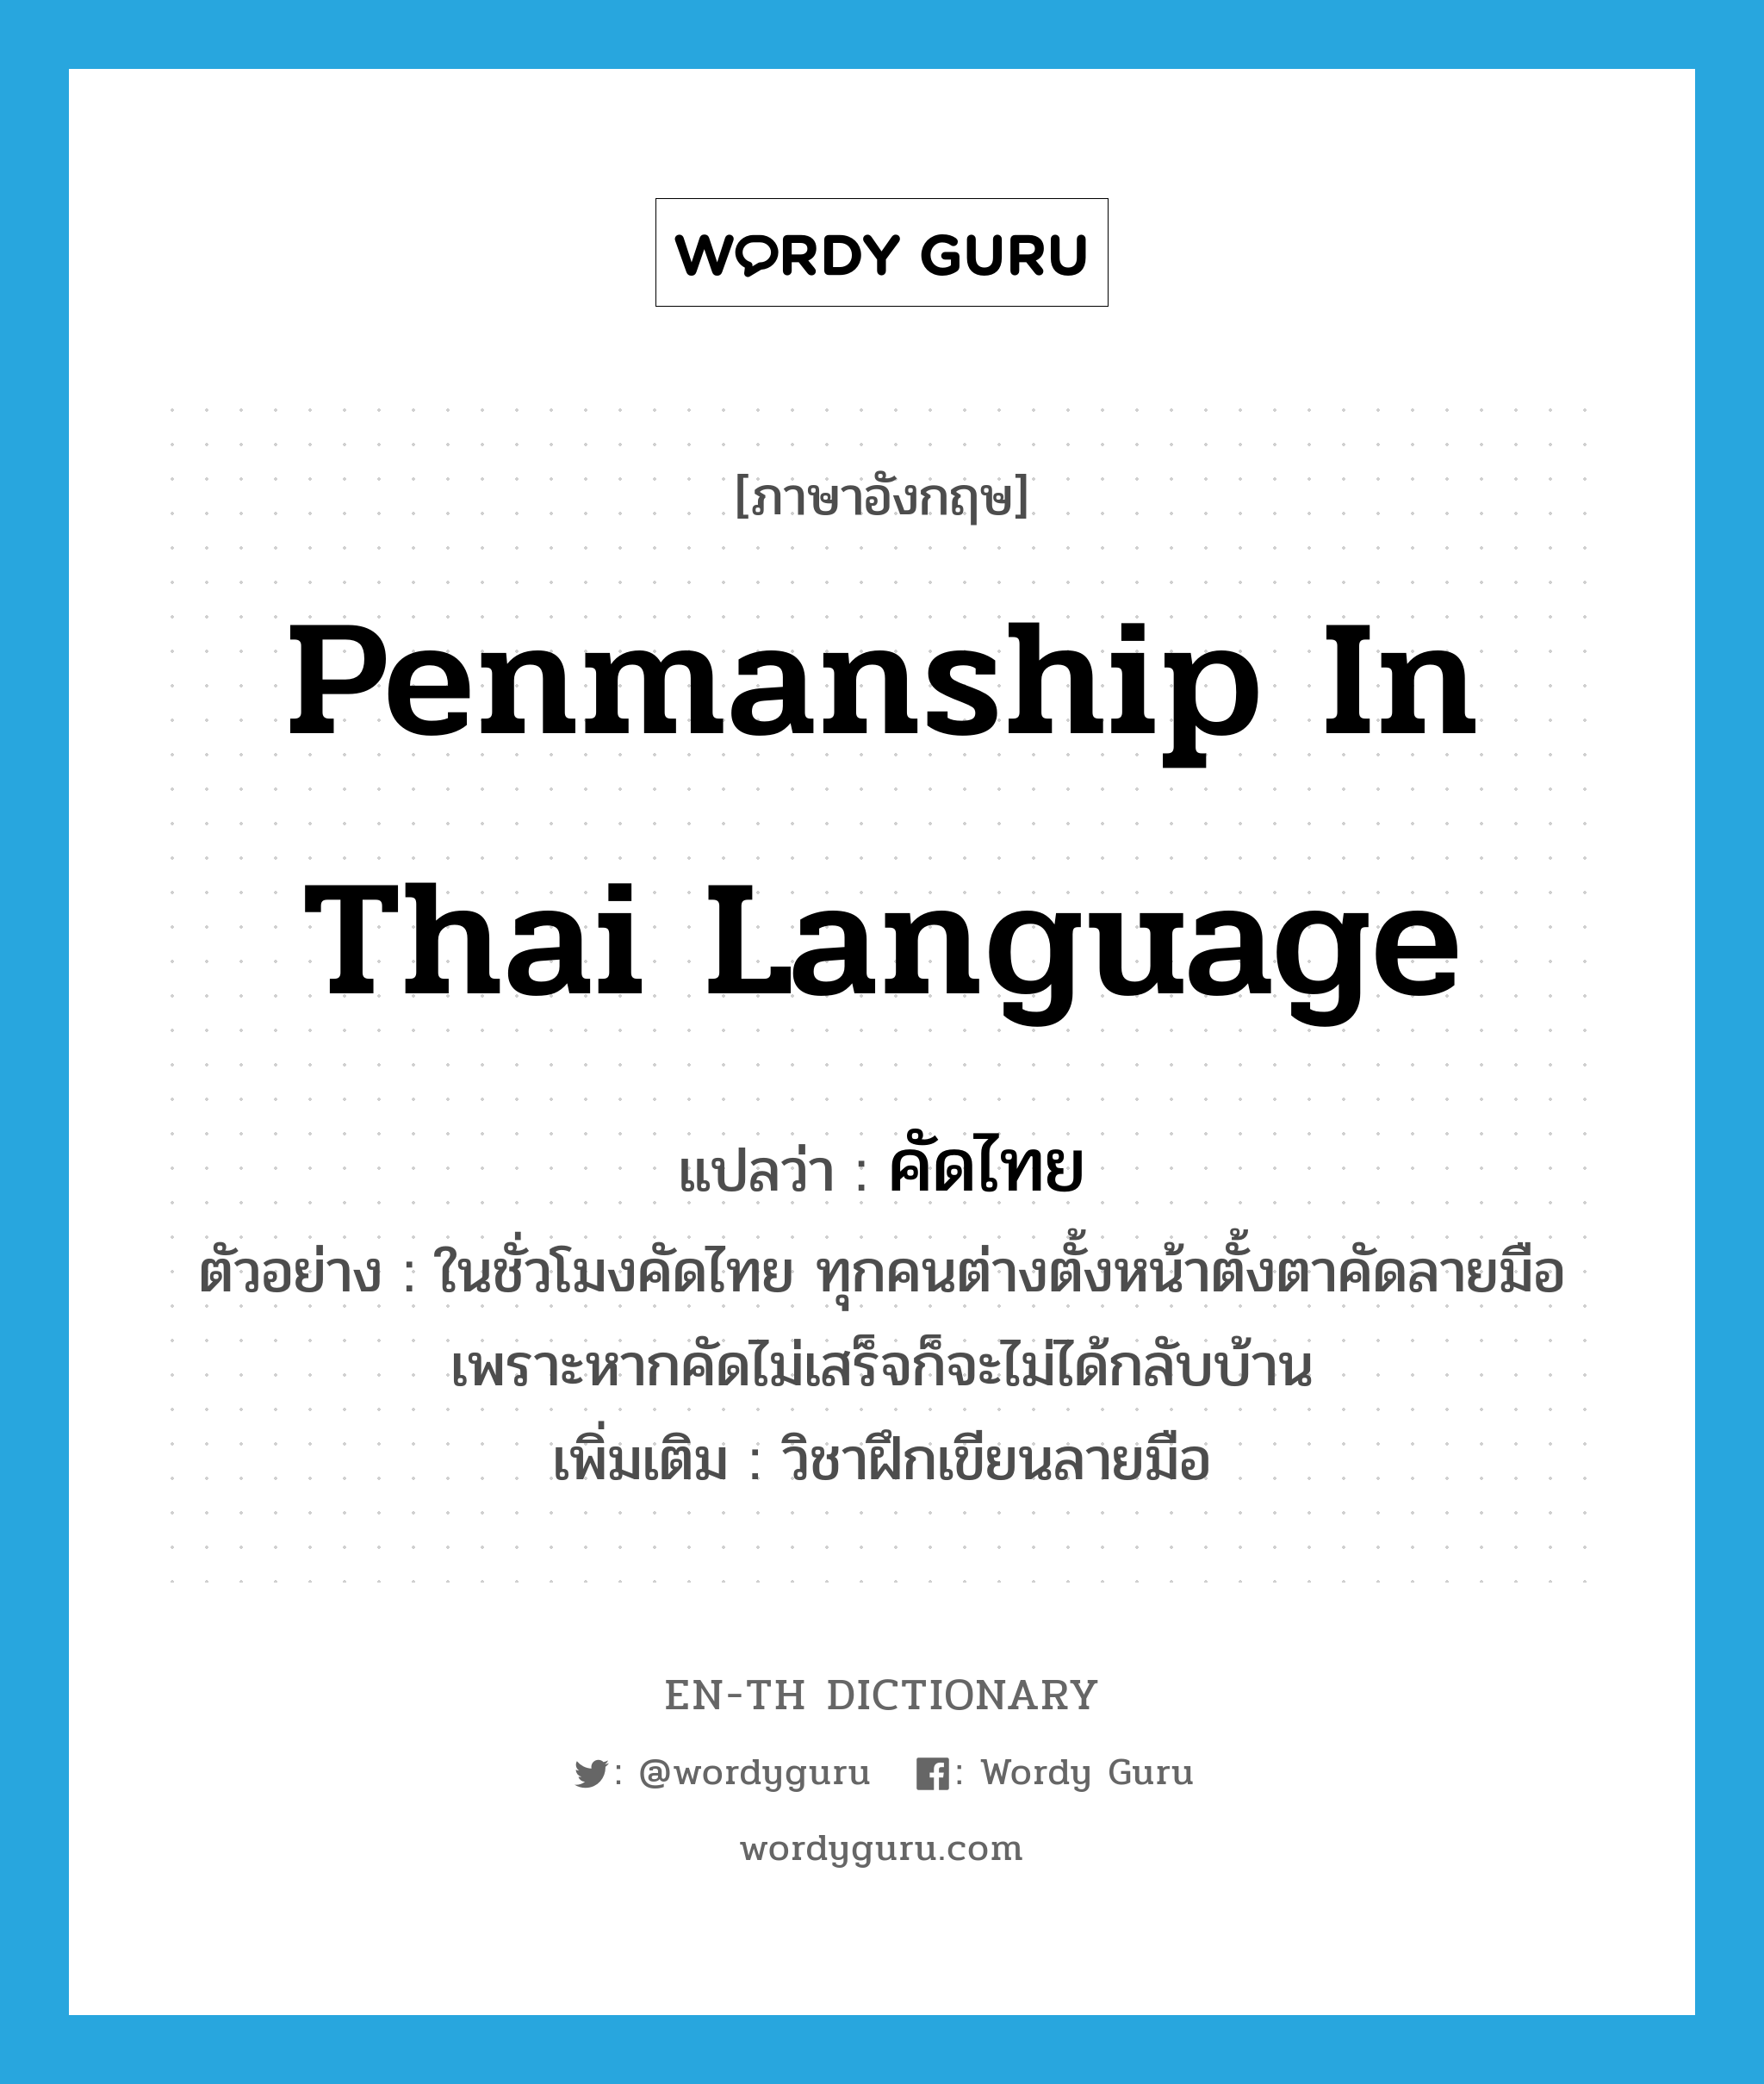 penmanship in Thai language แปลว่า?, คำศัพท์ภาษาอังกฤษ penmanship in Thai language แปลว่า คัดไทย ประเภท N ตัวอย่าง ในชั่วโมงคัดไทย ทุกคนต่างตั้งหน้าตั้งตาคัดลายมือ เพราะหากคัดไม่เสร็จก็จะไม่ได้กลับบ้าน เพิ่มเติม วิชาฝึกเขียนลายมือ หมวด N